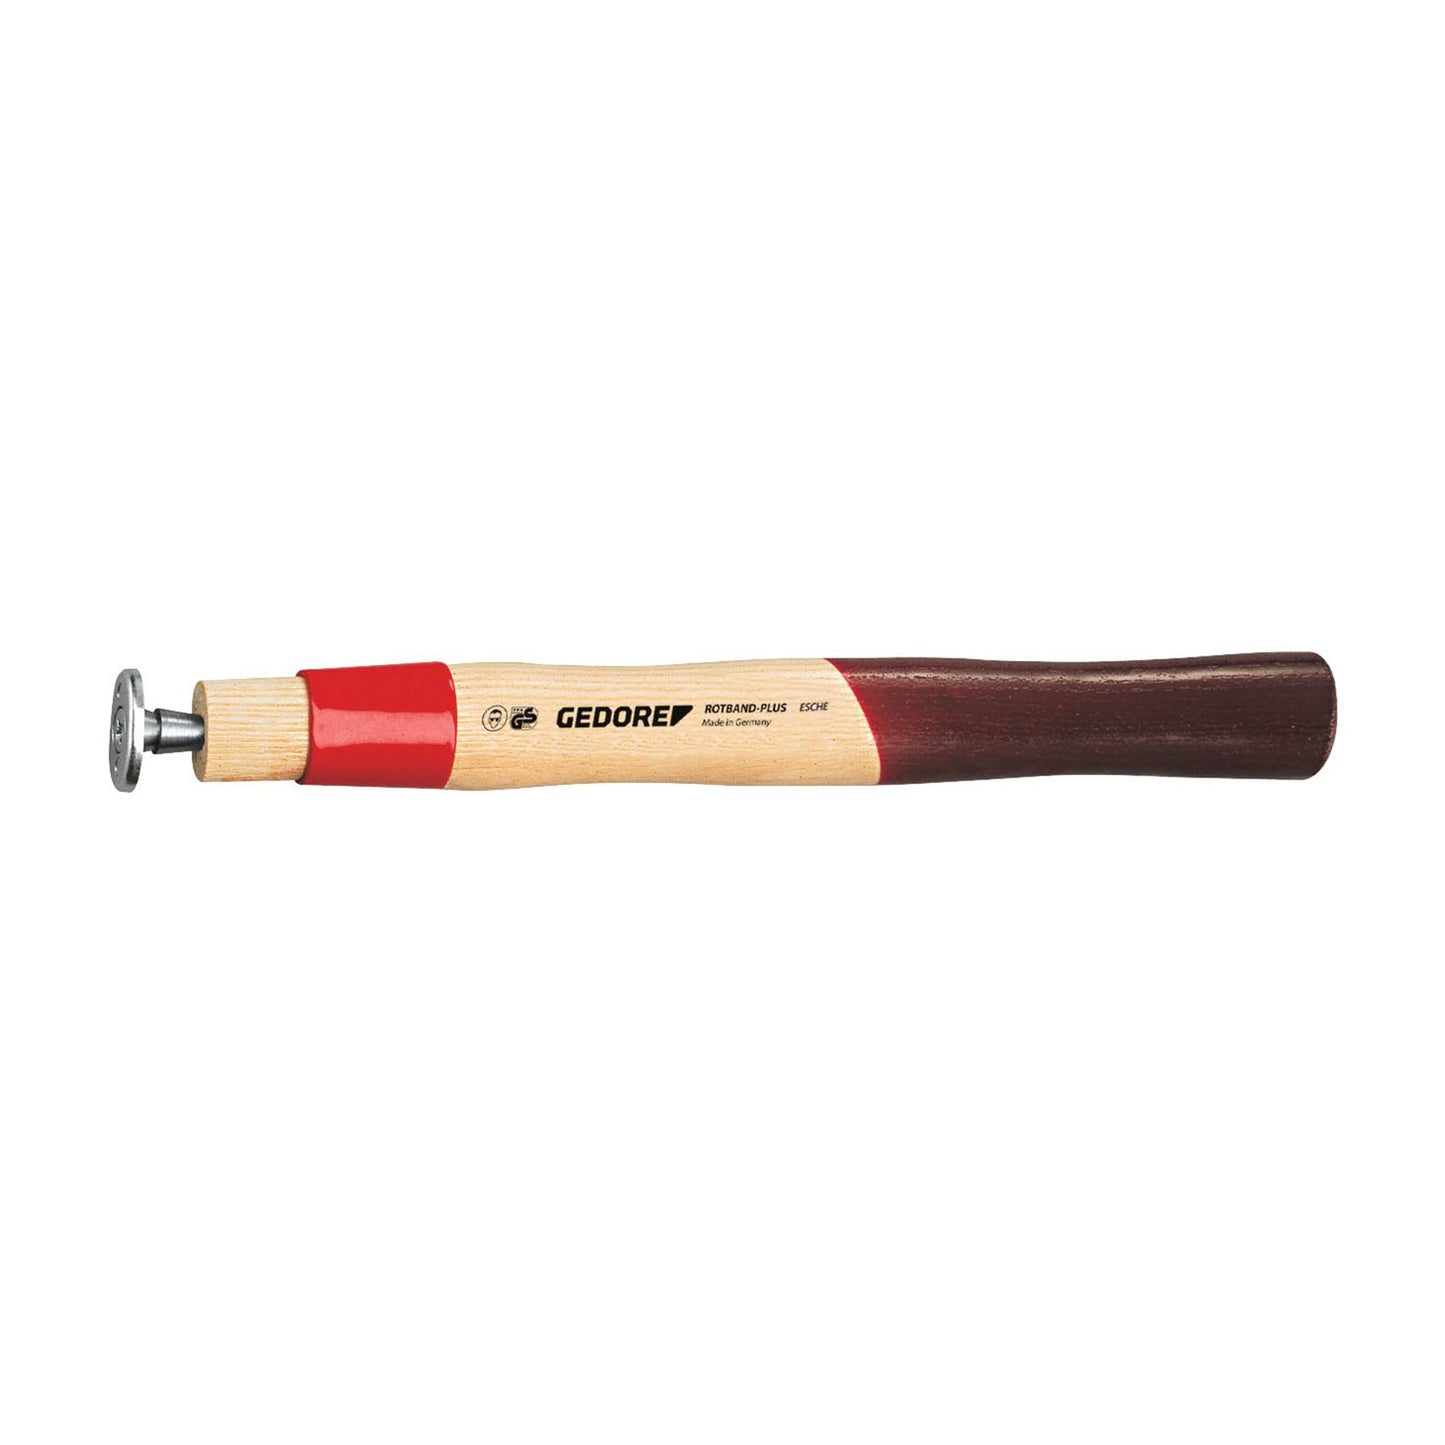 GEDORE E-620 E-1500 - ROTBAND ash handle 28cm (8676670)